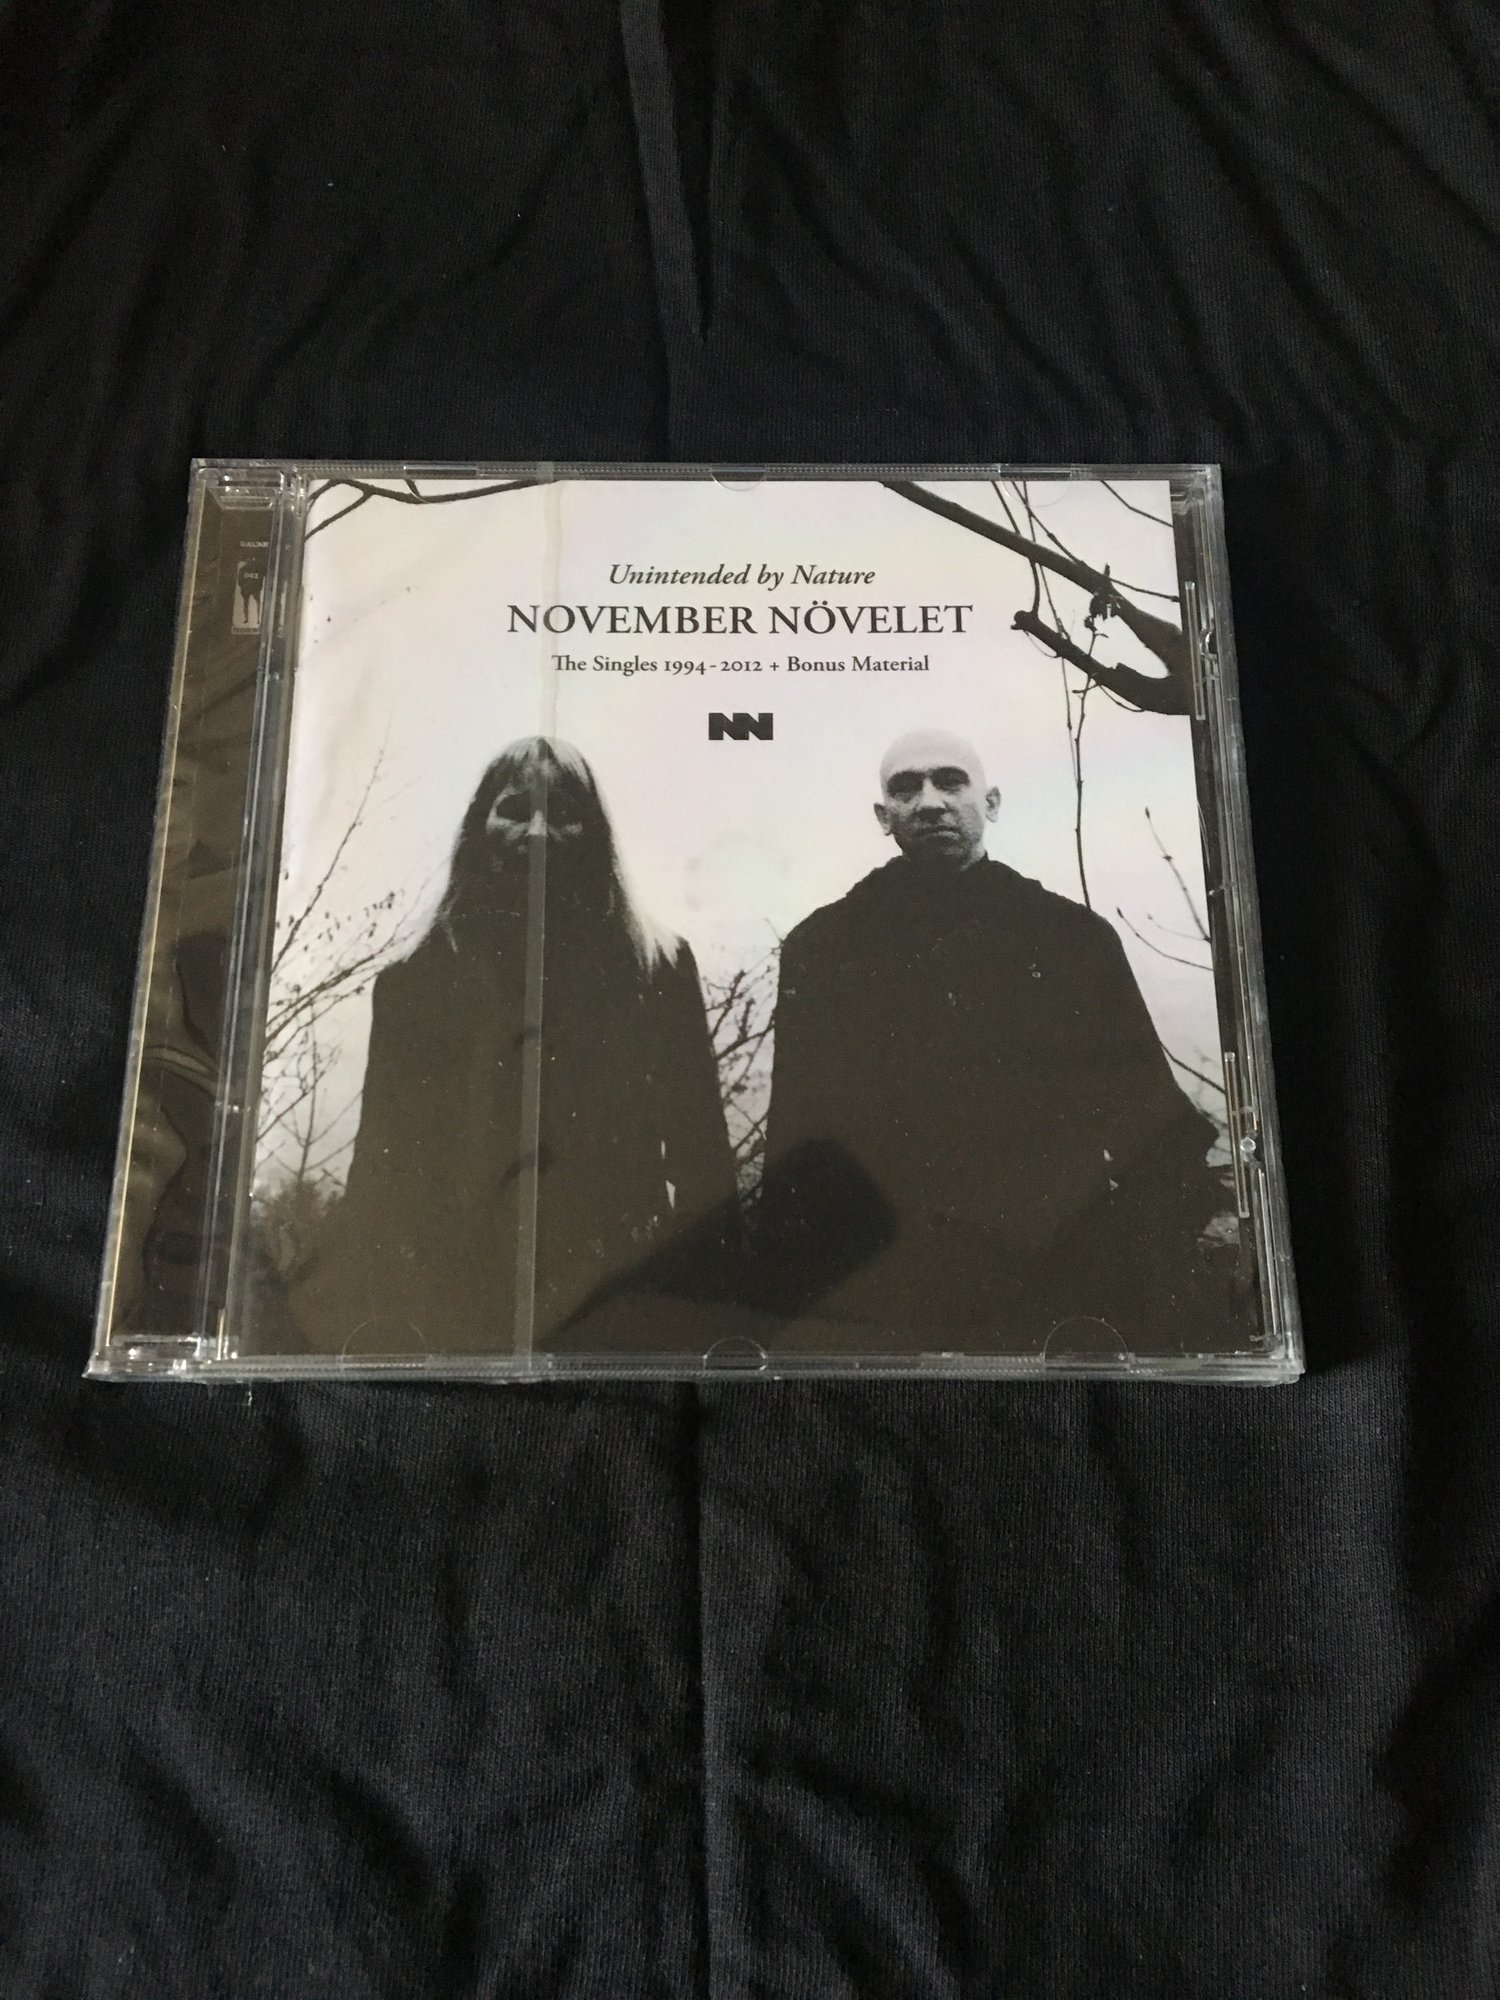 NOVEMBER NÖVELET - UNINTENDED BY NATURE CD (GALAKTHORRÖ)